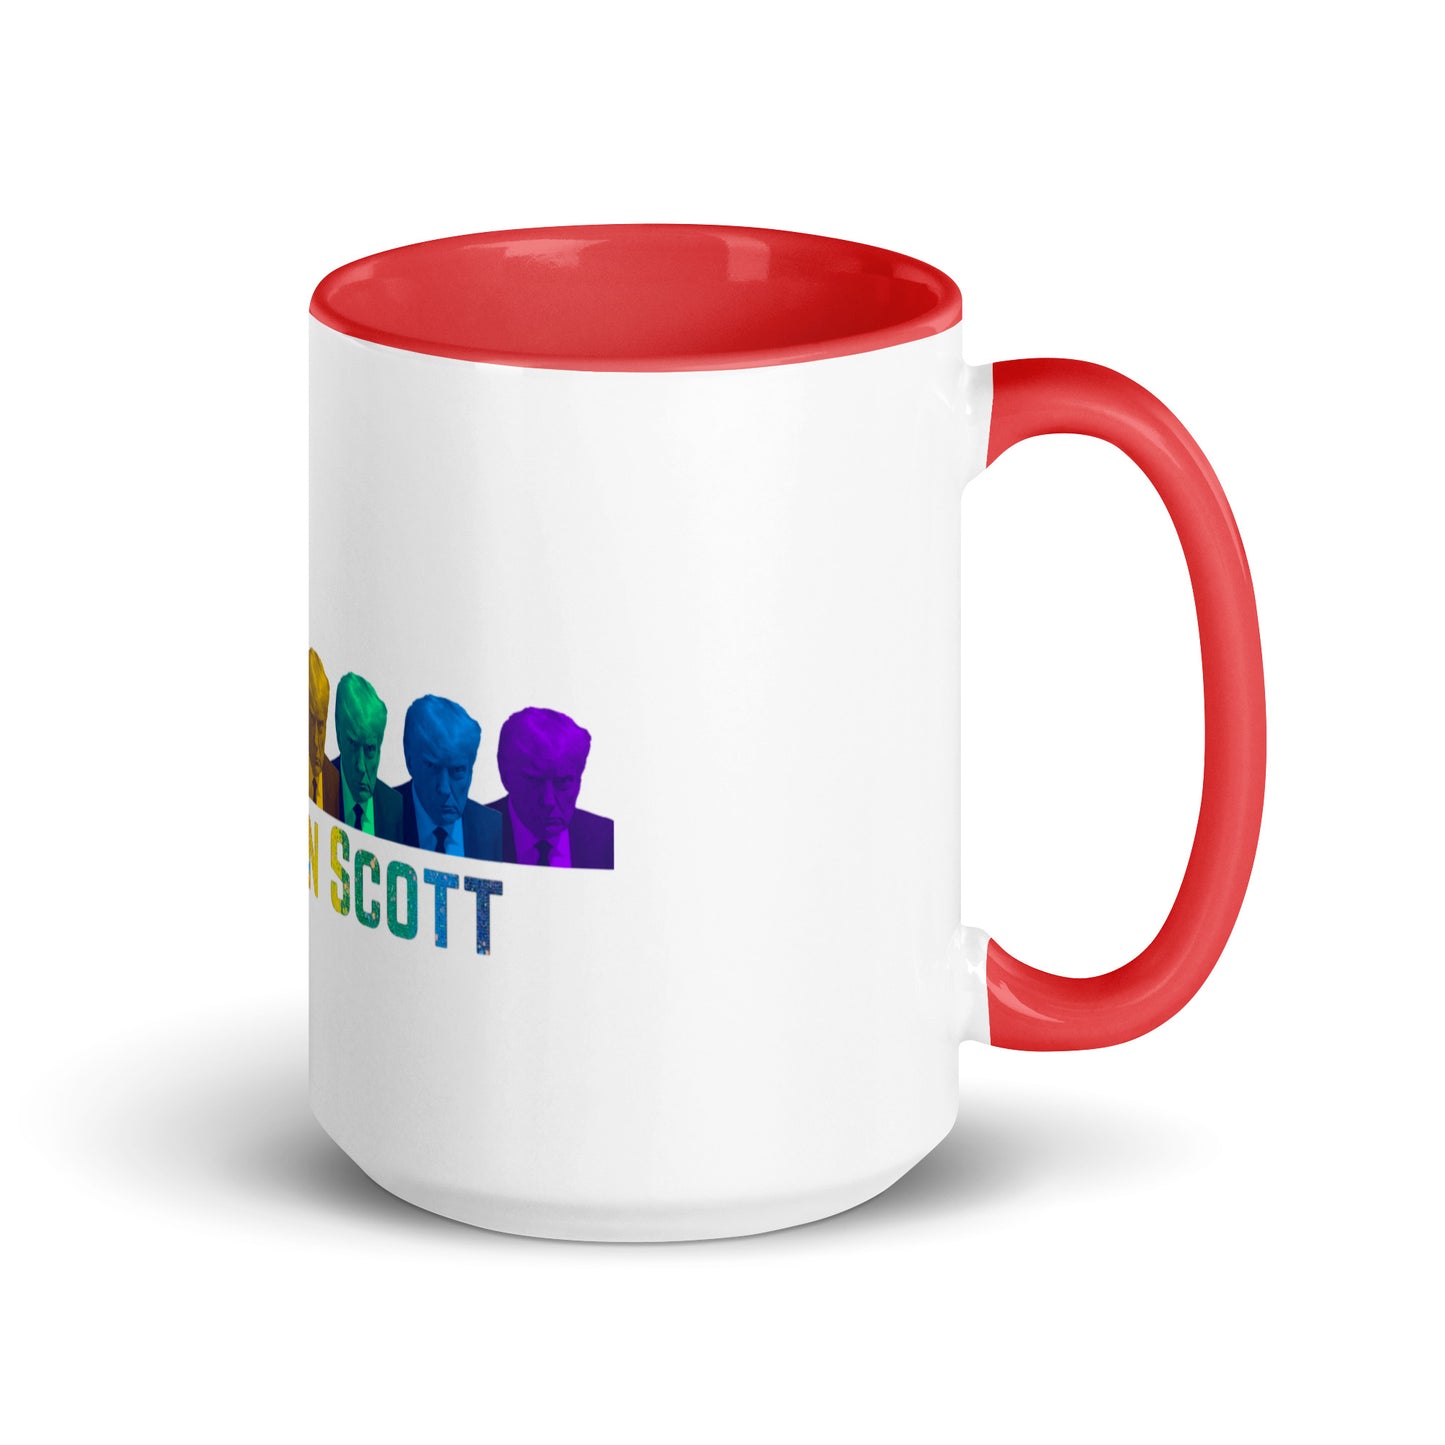 Gavin Scott PRIDE Trump Lineup Mugshot Mug (Multiple colors and sizes)